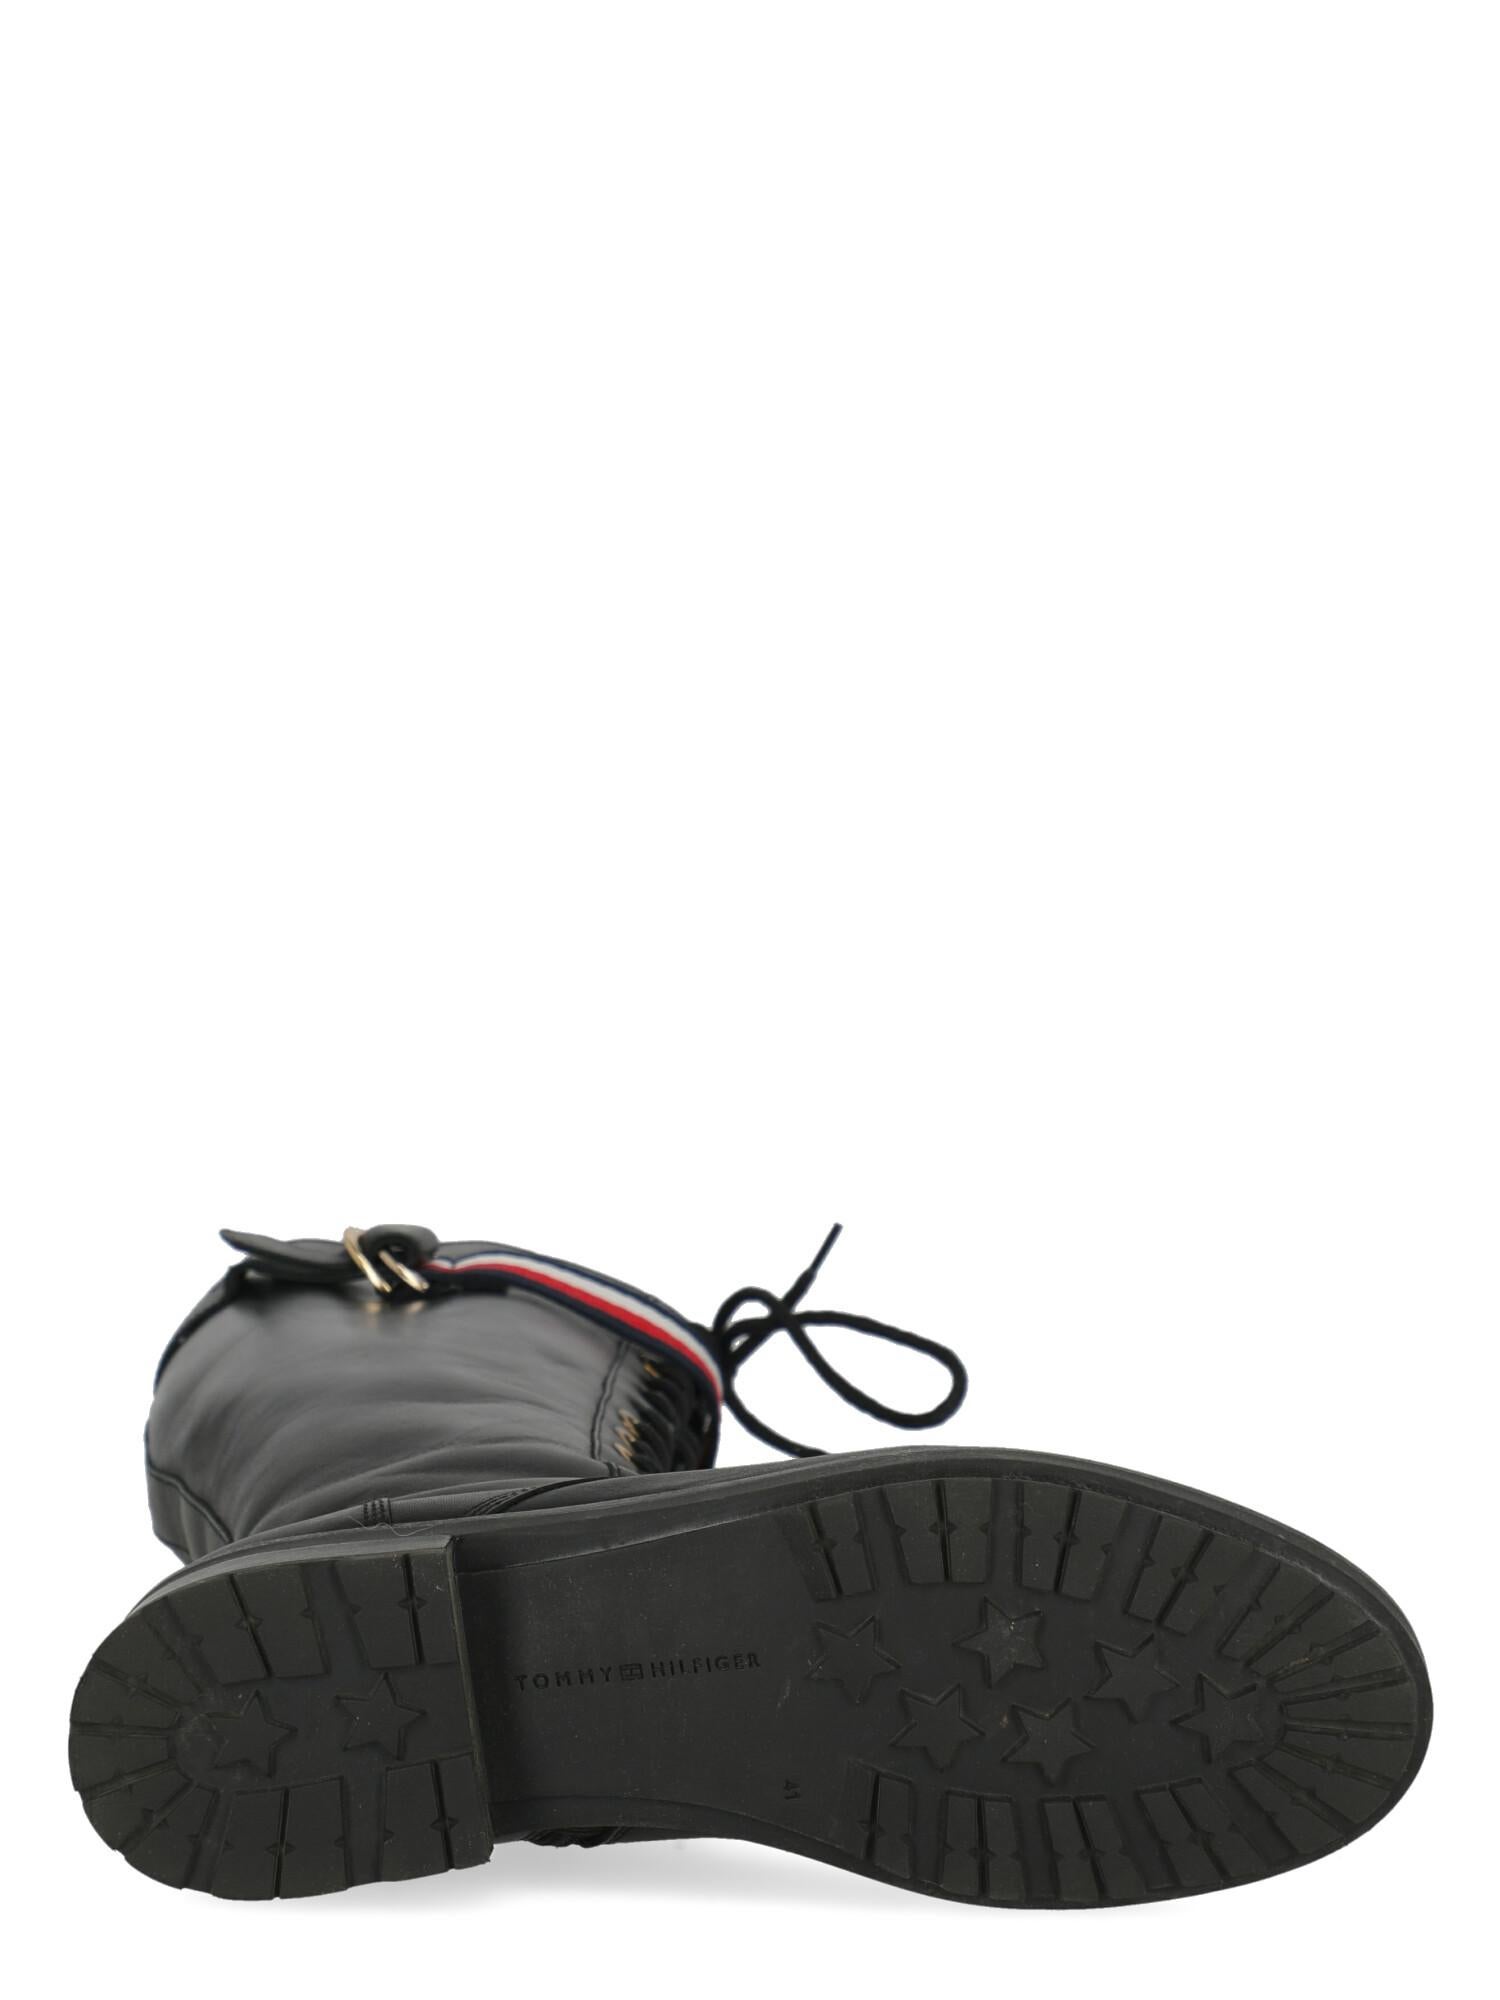 Women's Tommy Hilfiger Women Boots Black Leather EU 41 For Sale